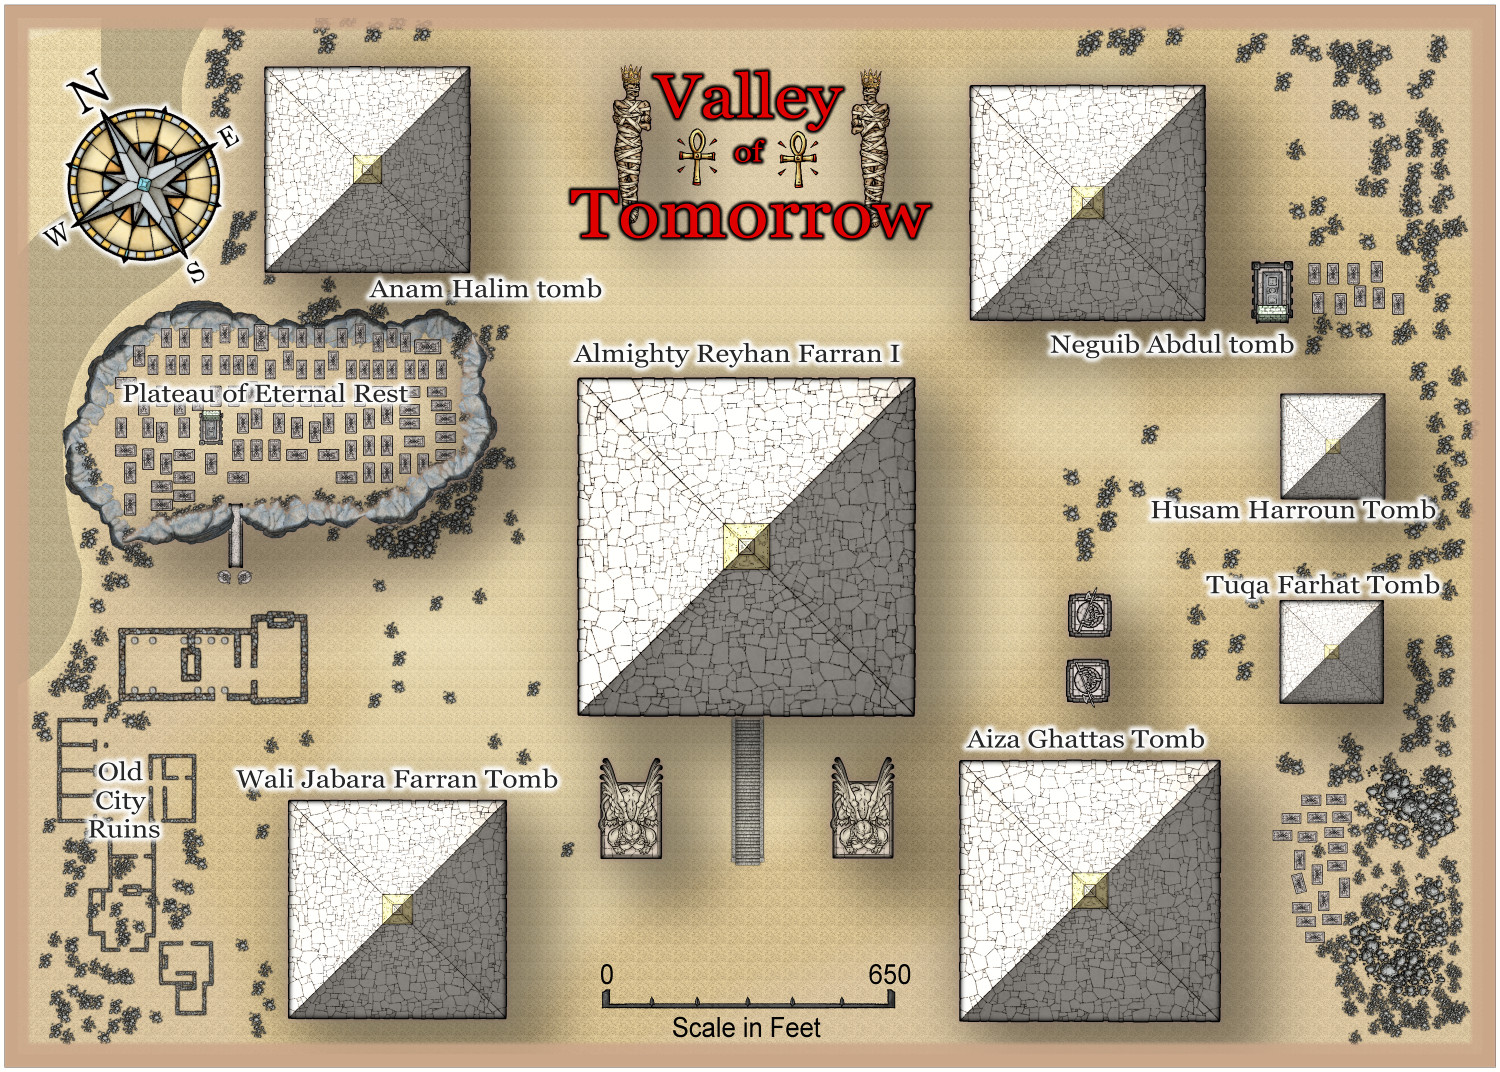 9 valley of tomorrow.JPG